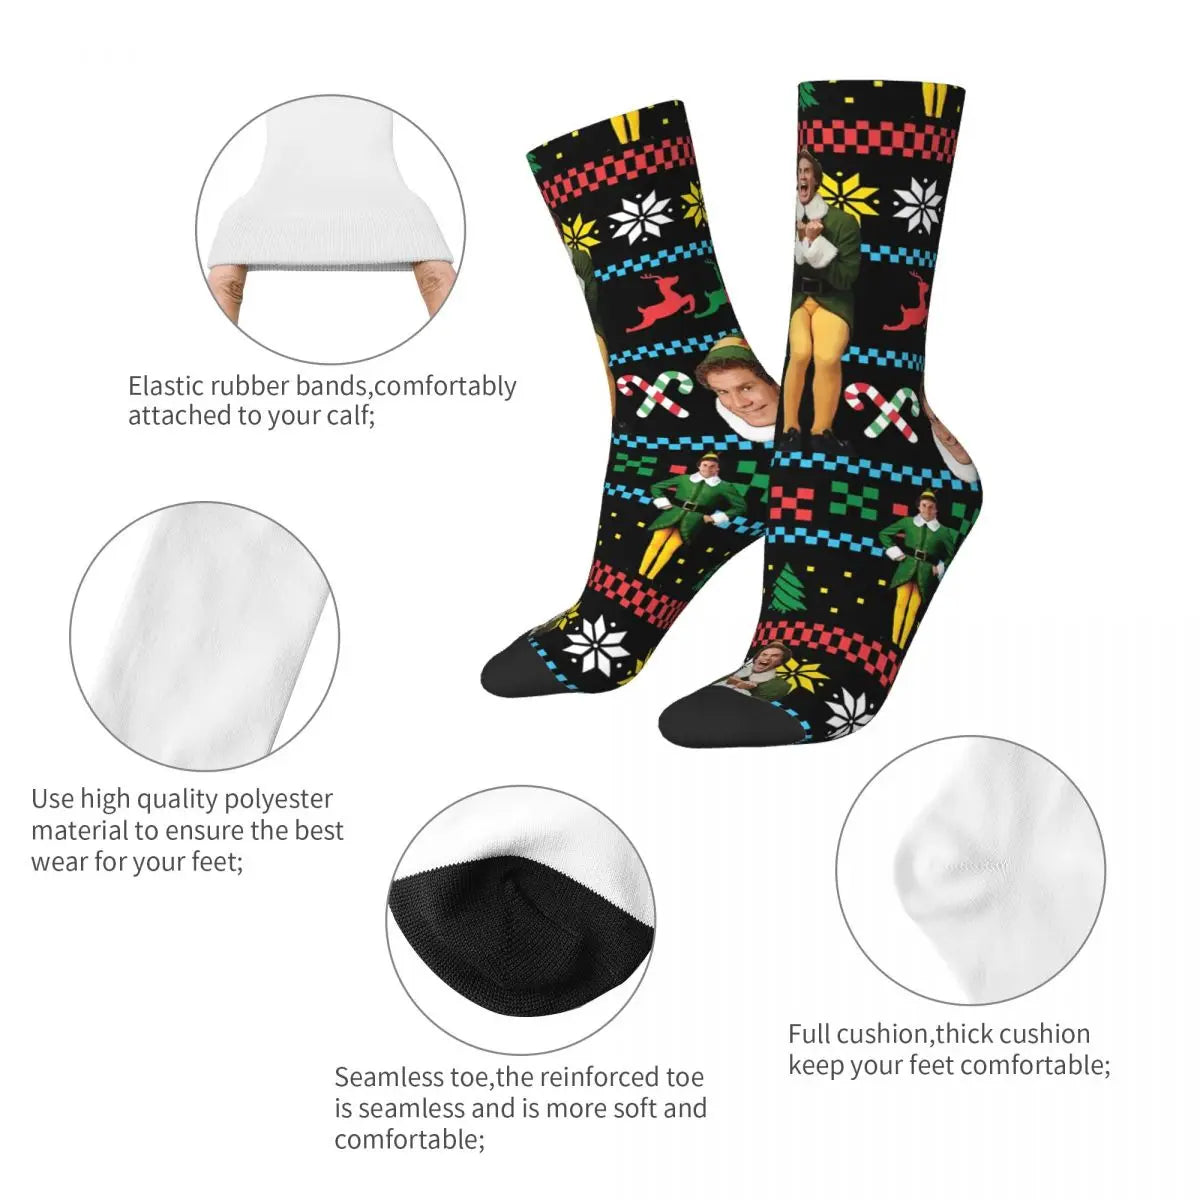 Buddy The Elf Ugly Christmas Sweater Socks - Xmas Movie Will Ferrell Kawaii - Sports Cartoon Pattern Harajuku Men's Happy Hip Hop-WHITE-One Size-